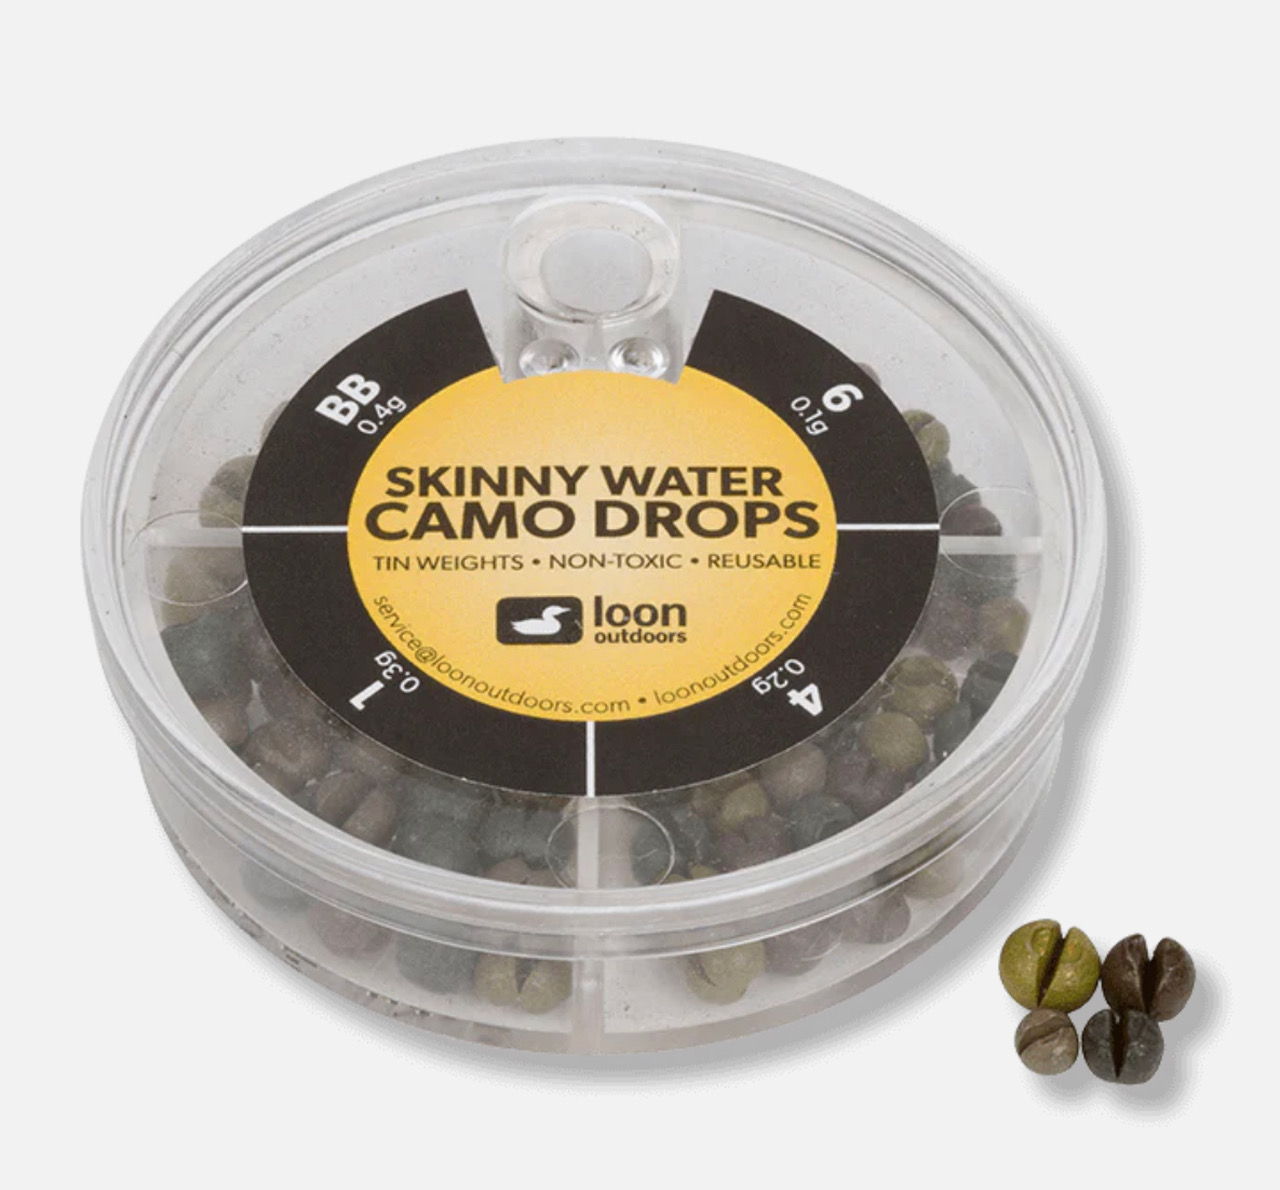 Skinny Water Camo Drops